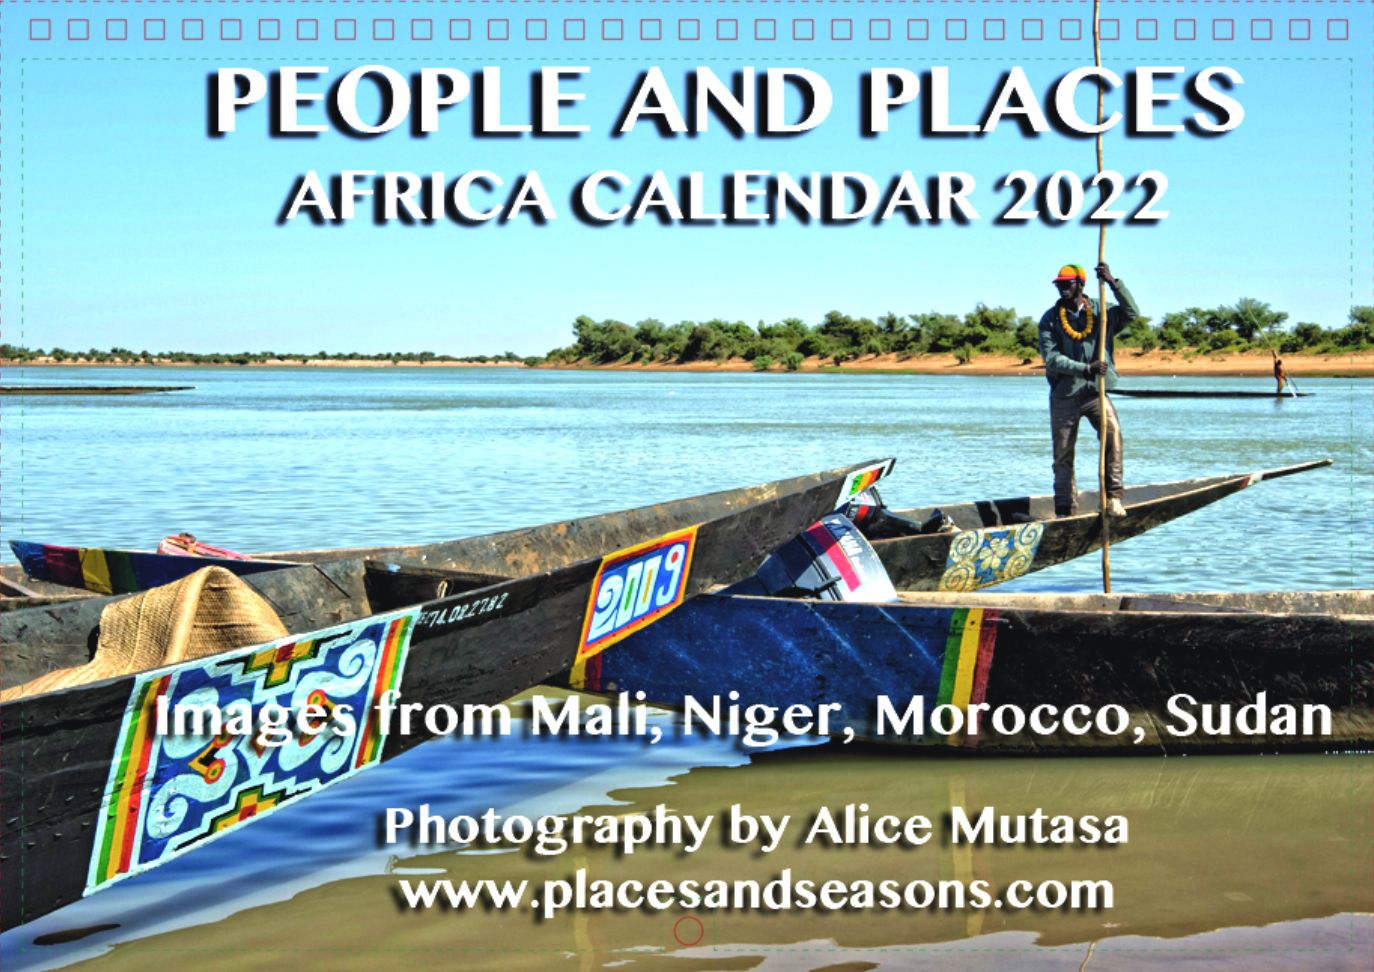 AFRICA CALENDARS 2022 – ORDER NOW!